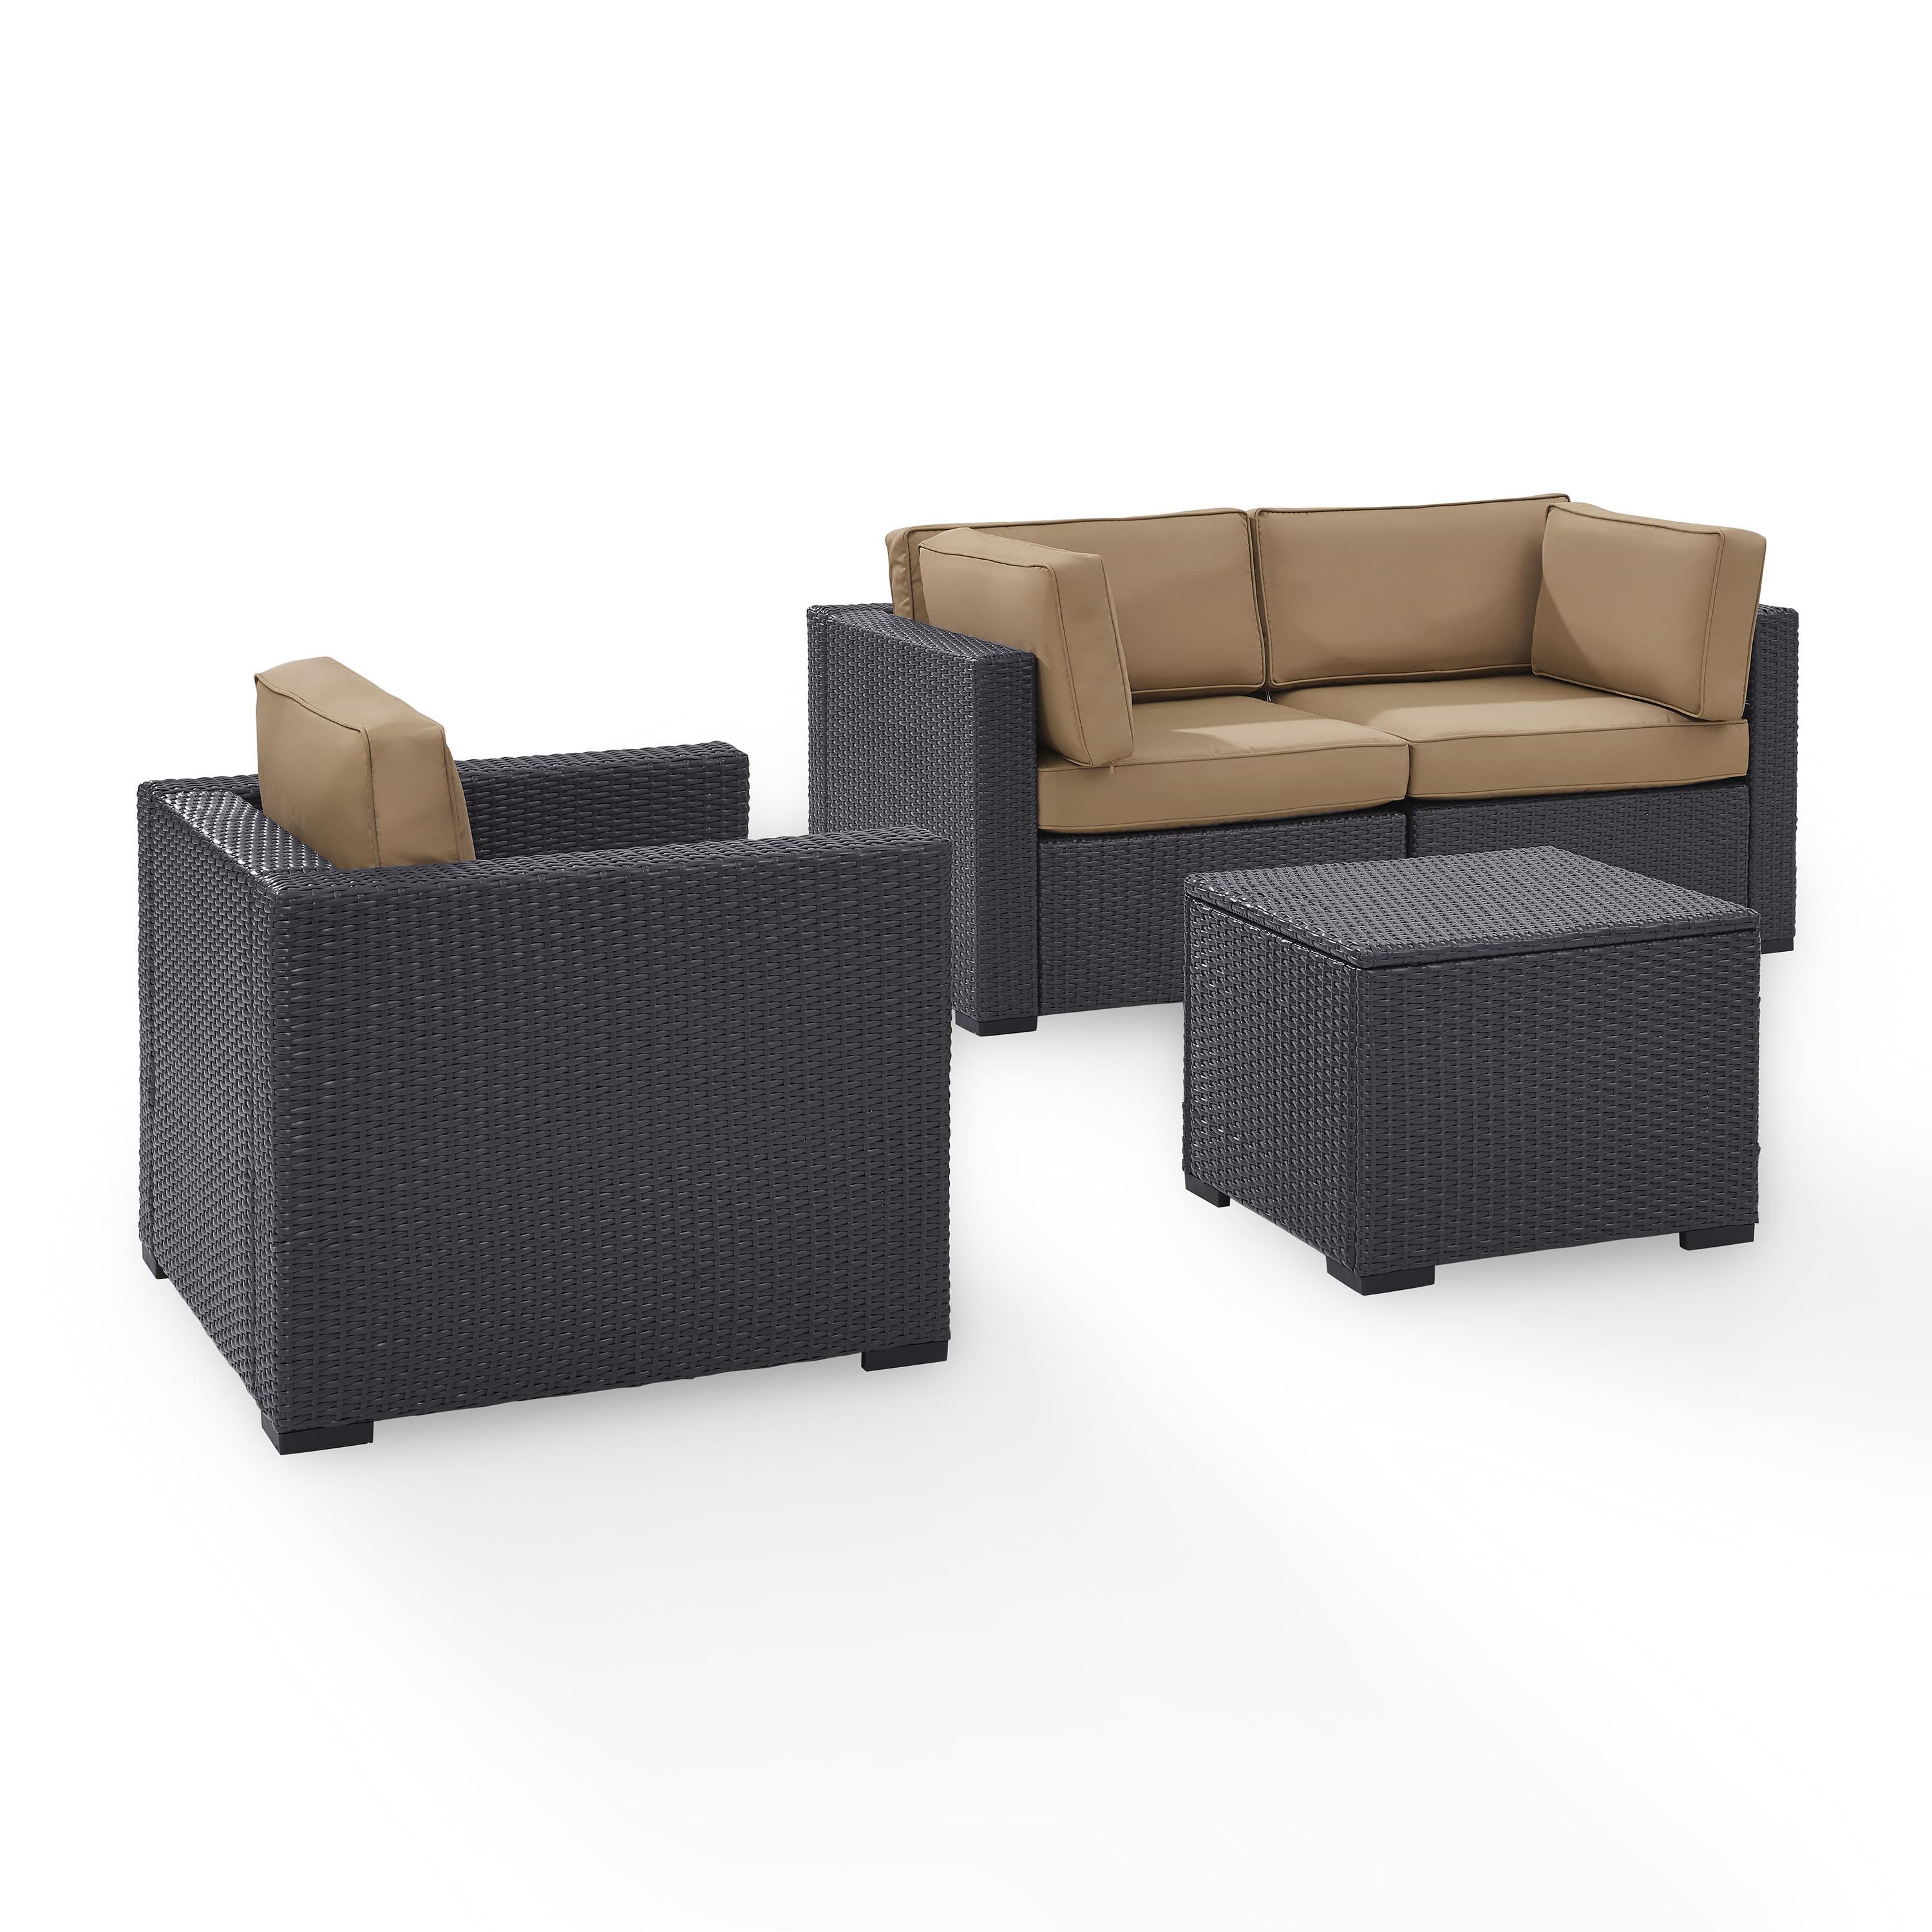 Crosley Furniture Biscayne 4 Piece Metal Patio Sofa Set in Brown/Mocha - image 2 of 4